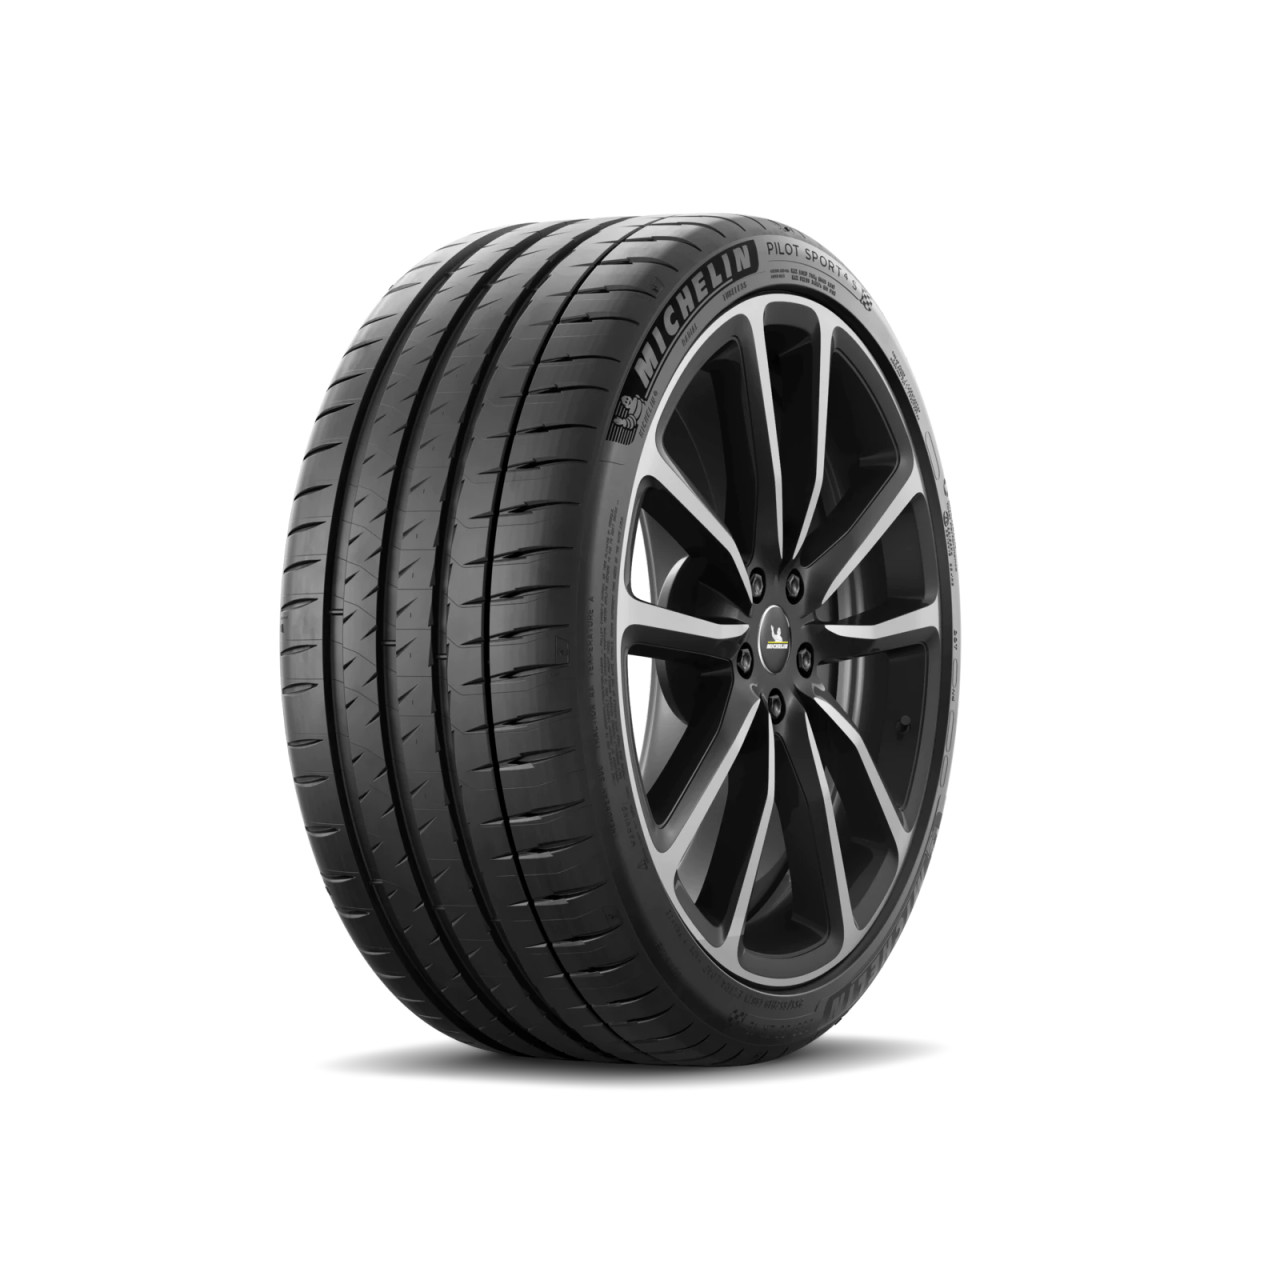 Michelin Pilot Sport 4S 275/30ZR19 (96Y) XL Tire